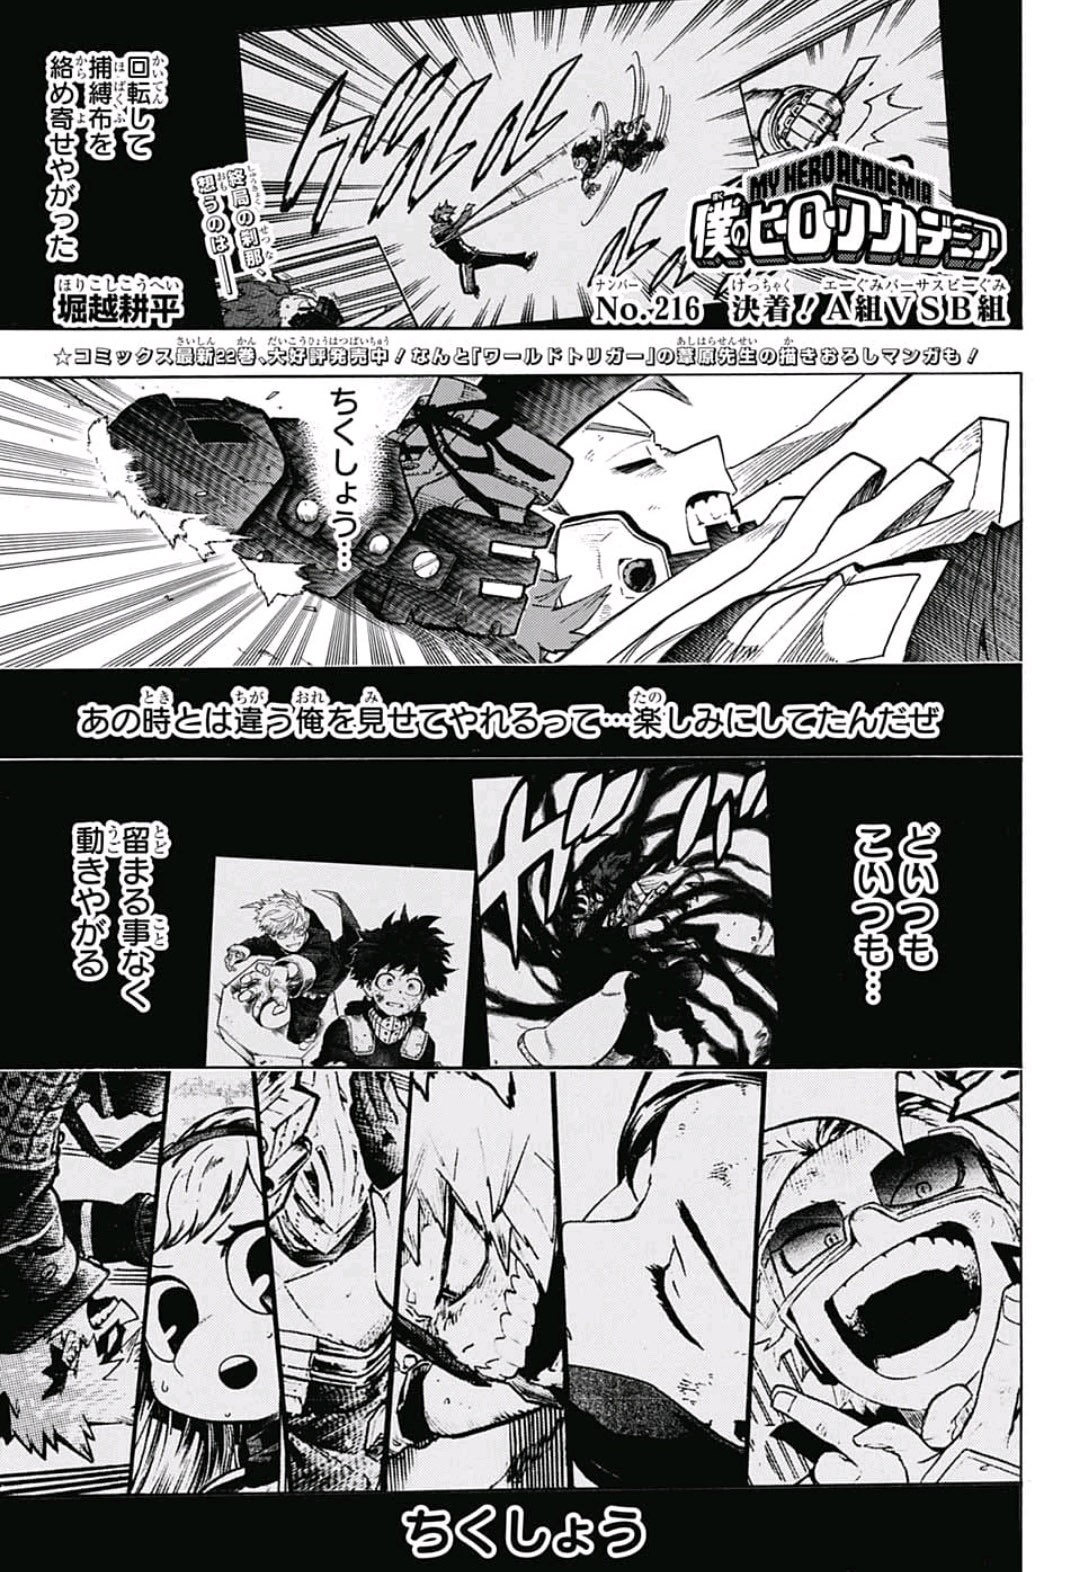 Boku no Hero Academia - Chapter 216 - Page 1